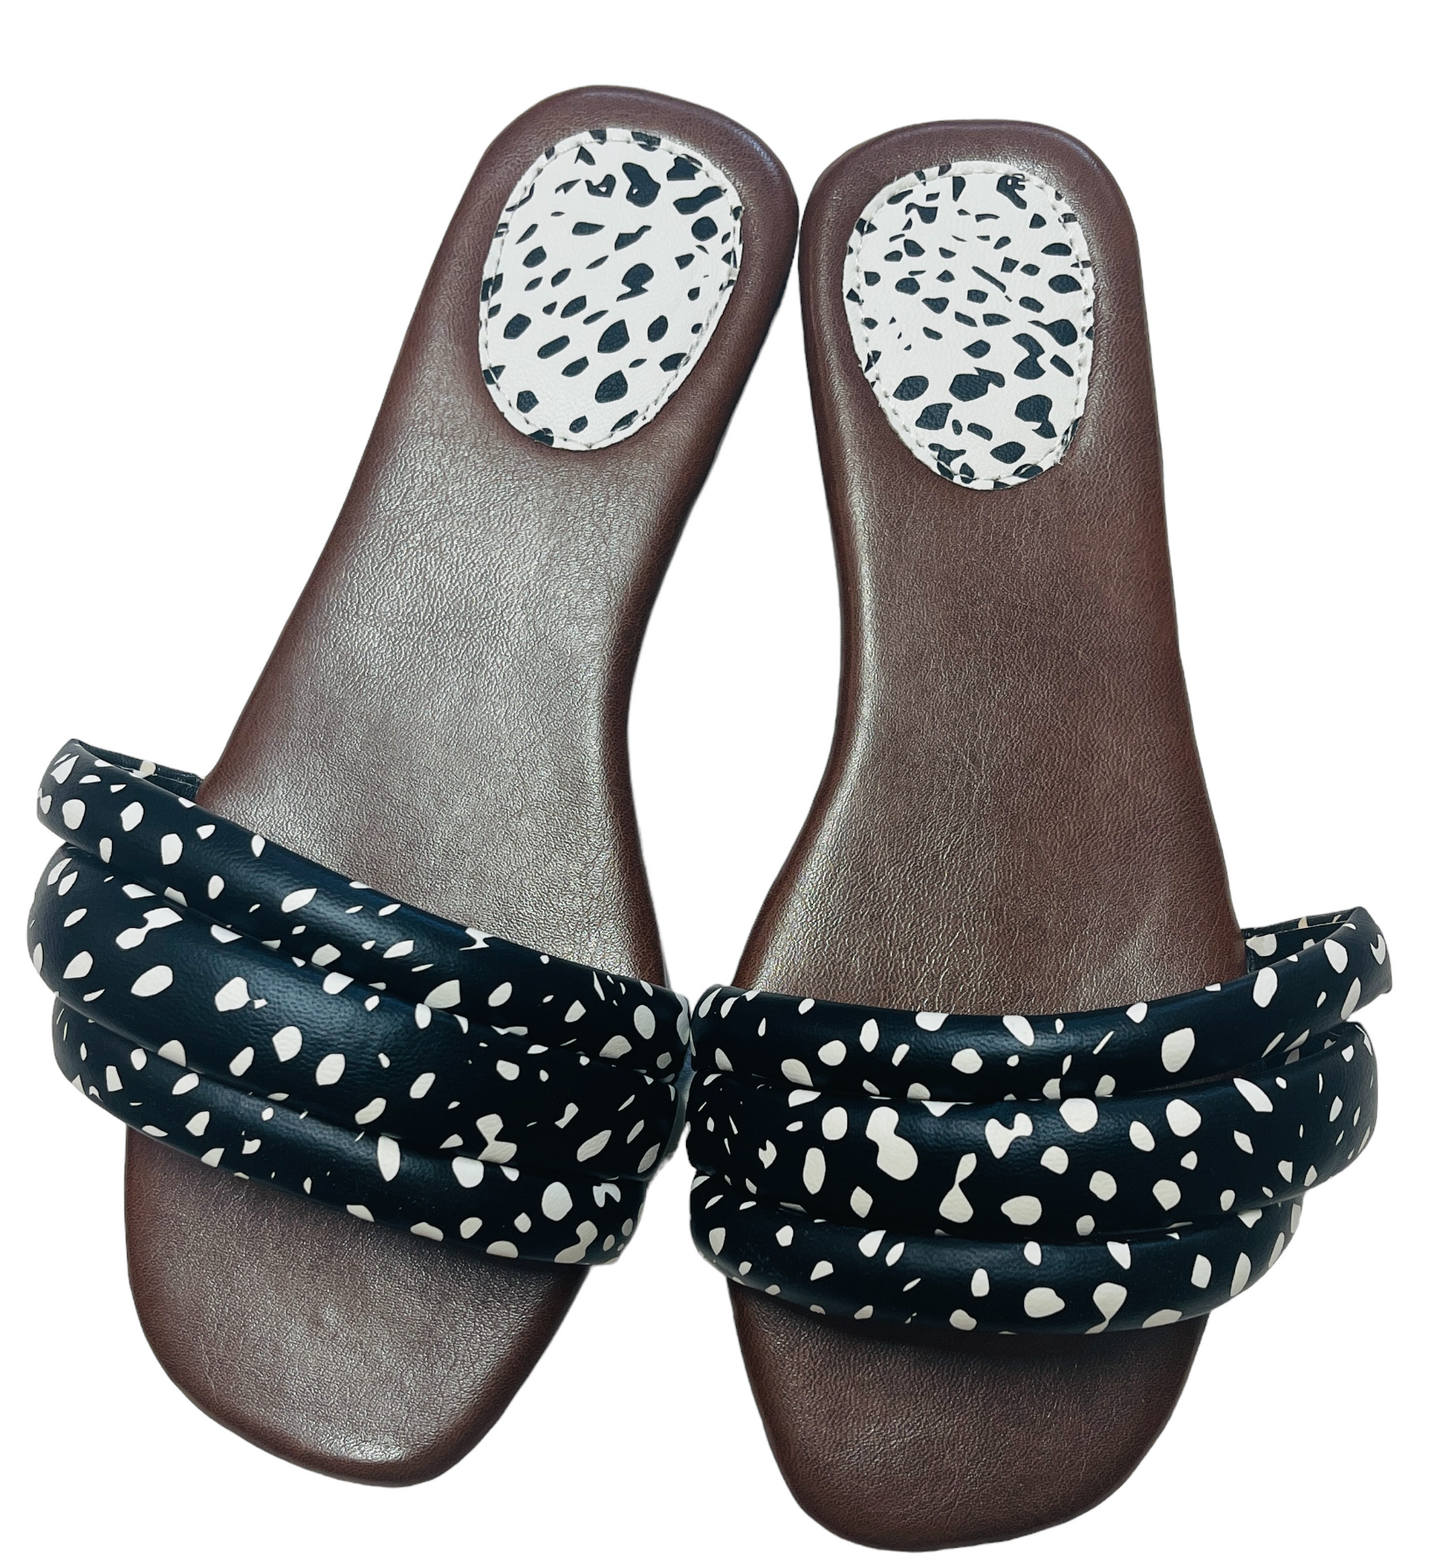 Summer Slipper | Comfortable Slipper in Black and White Slipper | Flat Slipper with no Heels